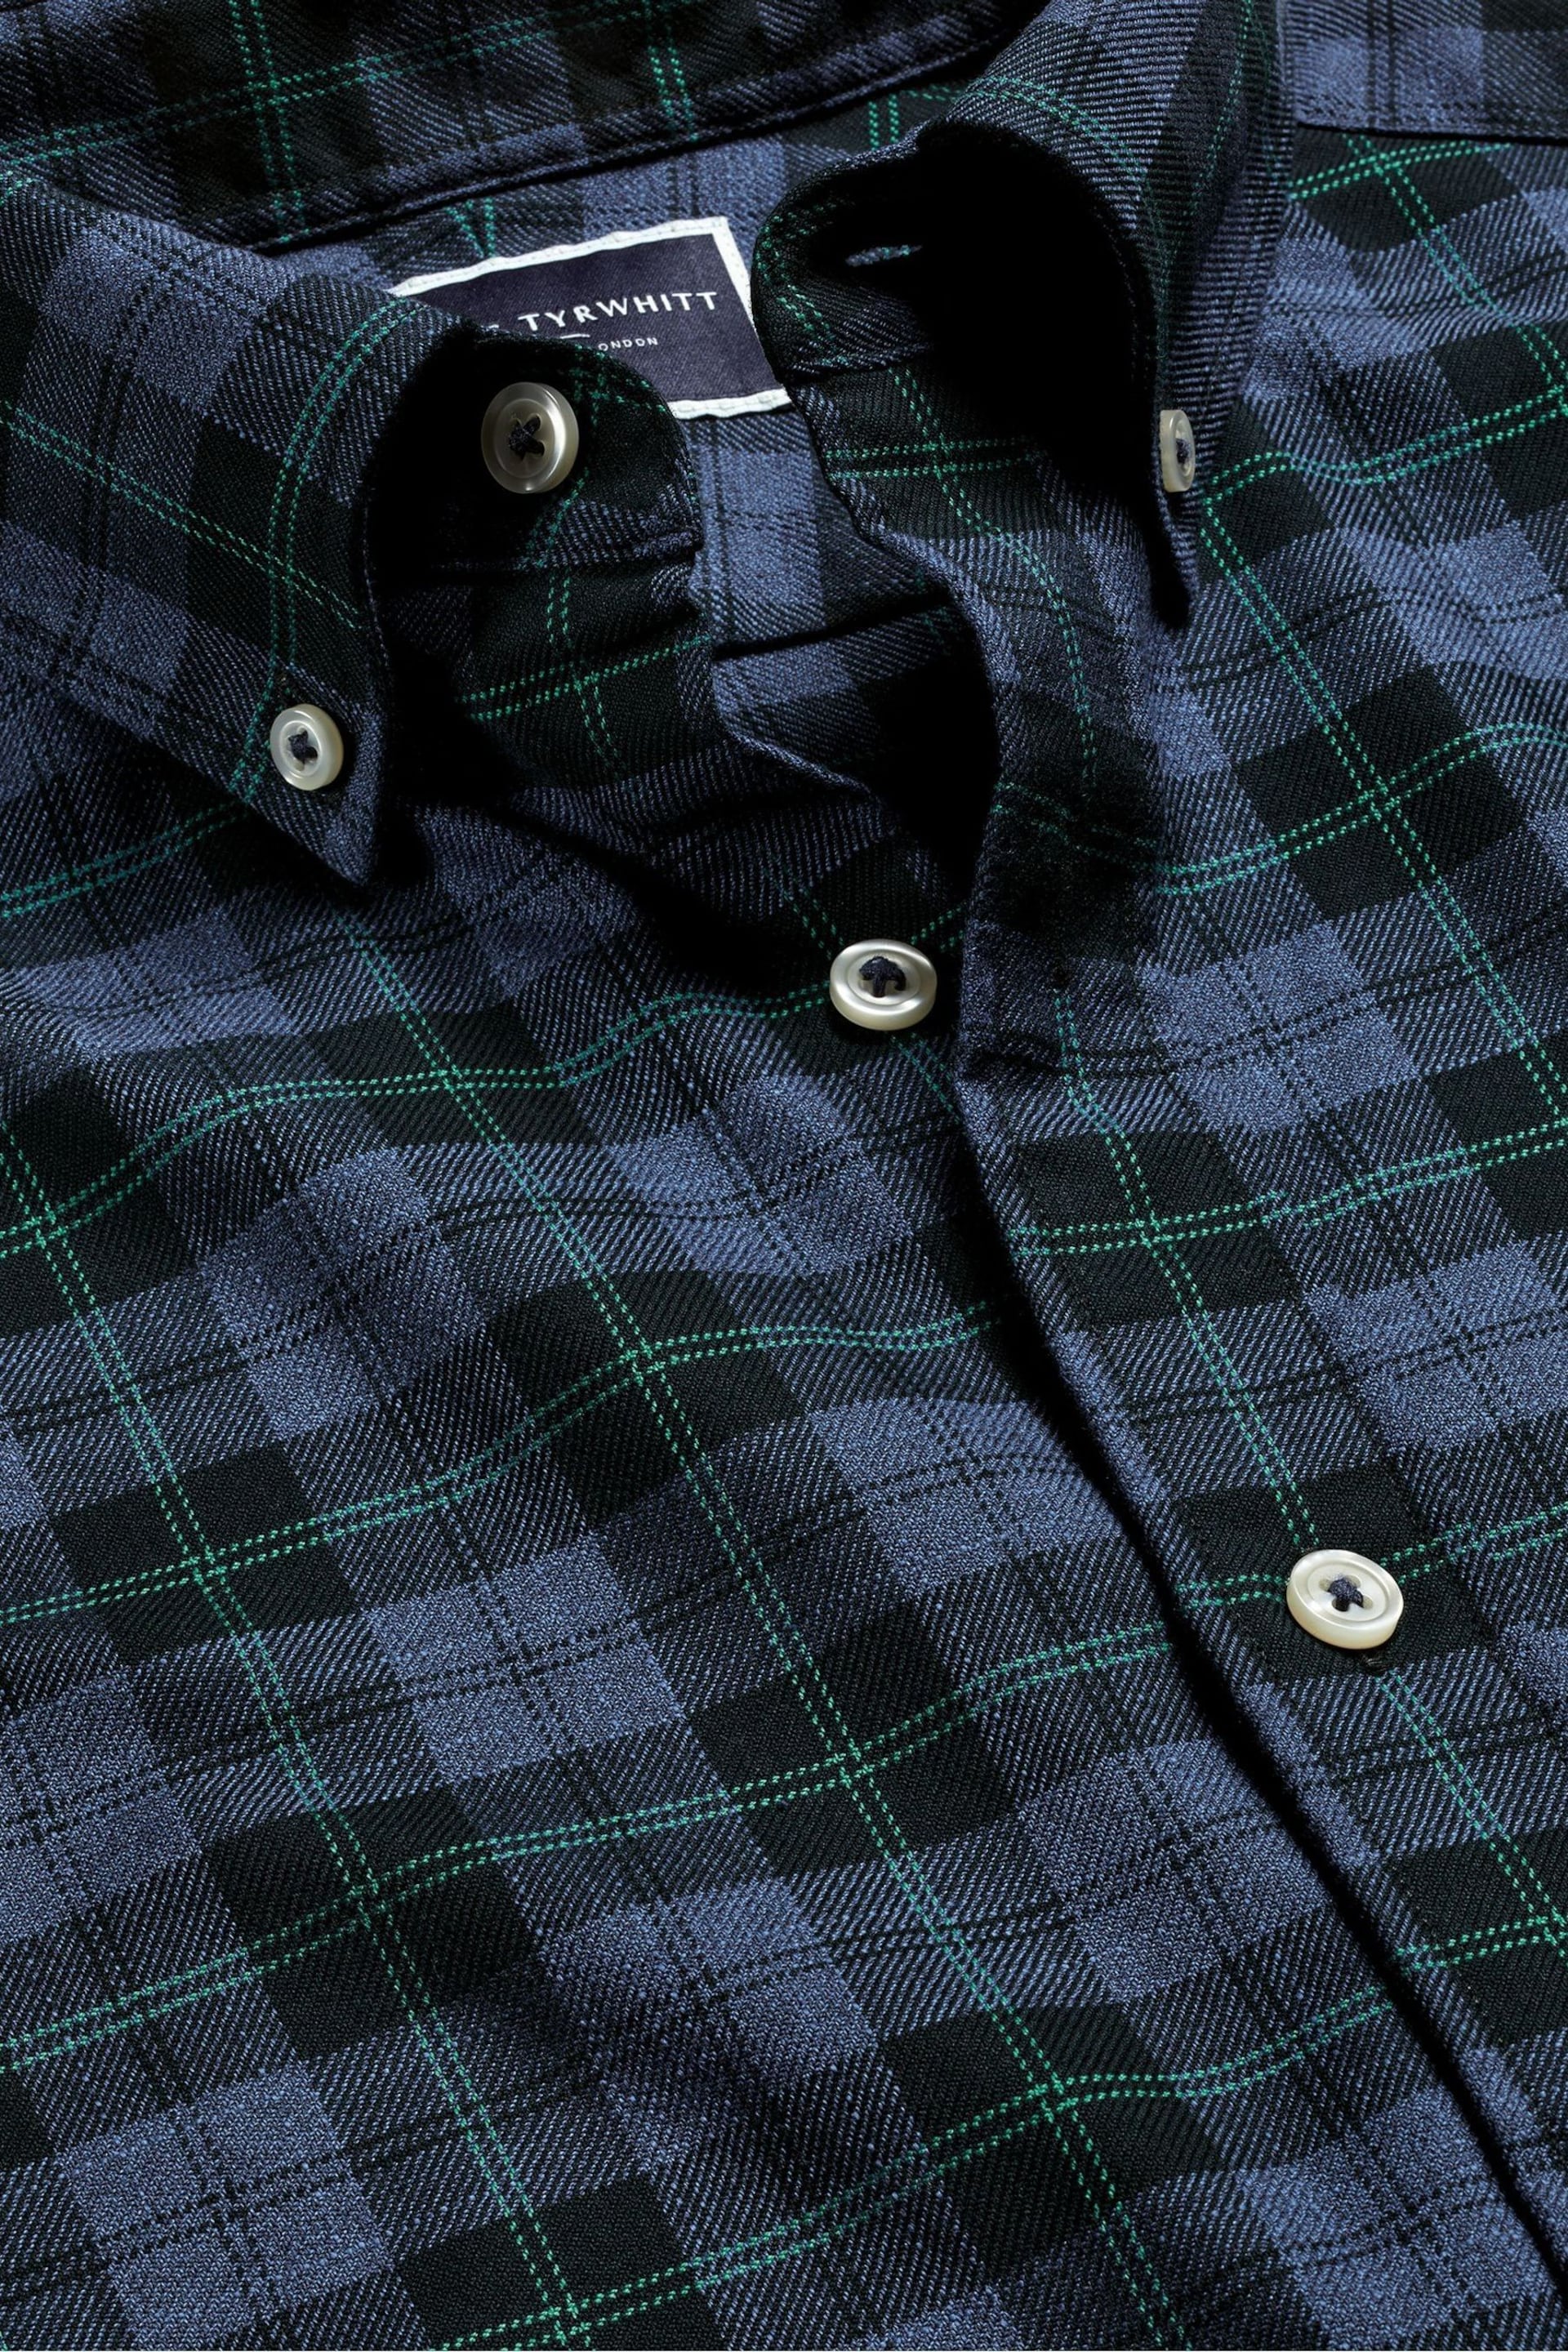 Charles Tyrwhitt Green Overcheck Slim Fit Non-iron Twill Shirt - Image 6 of 7